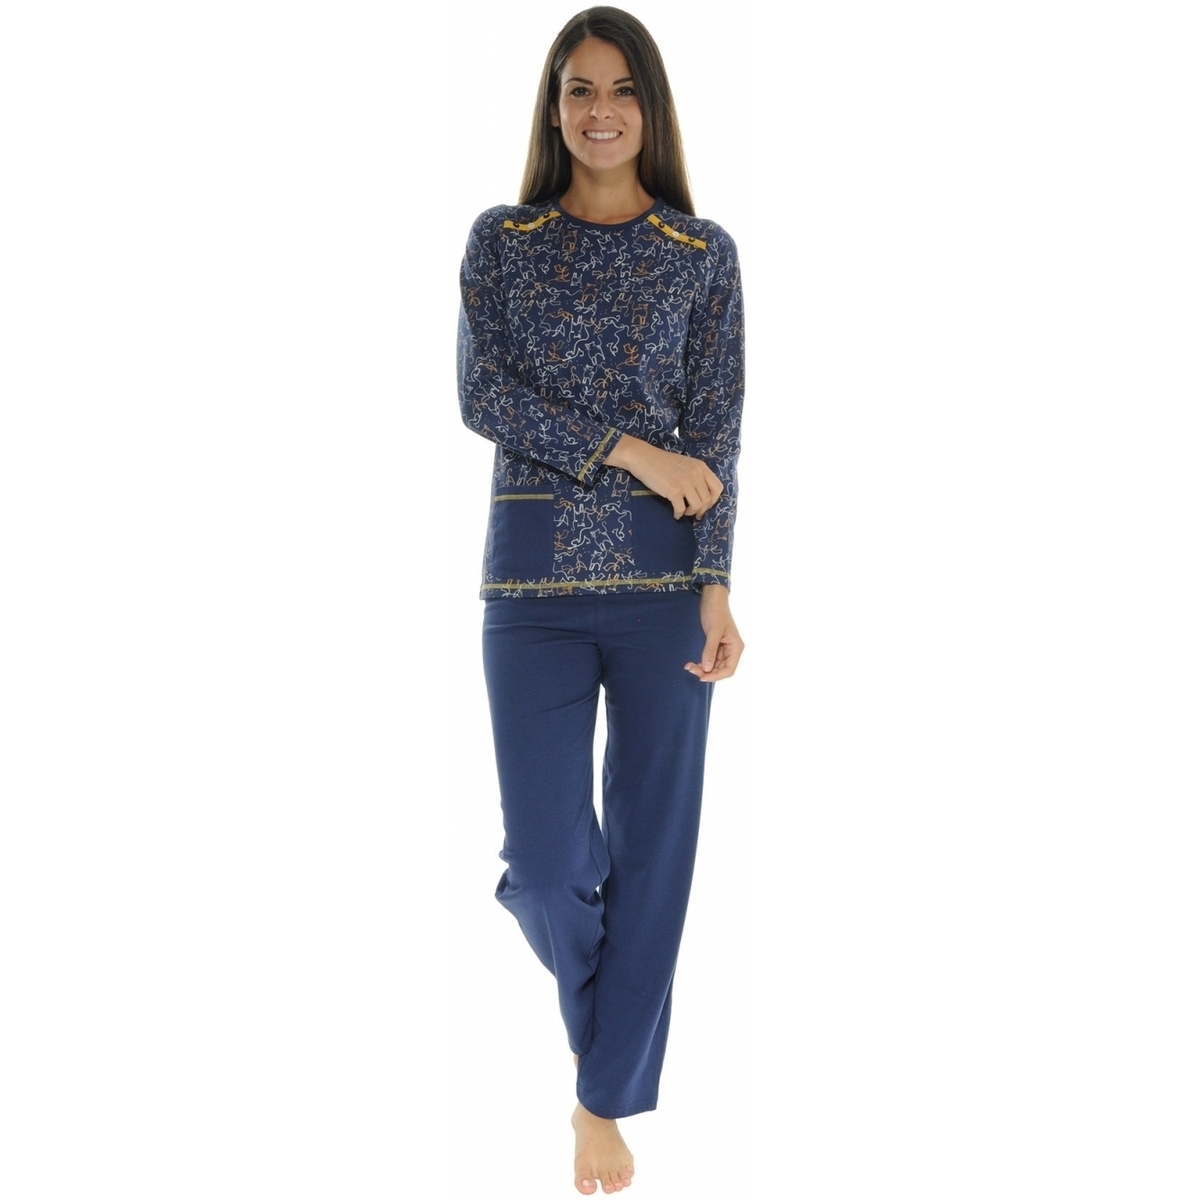 textil Mujer Pijama Christian Cane JUNE Azul